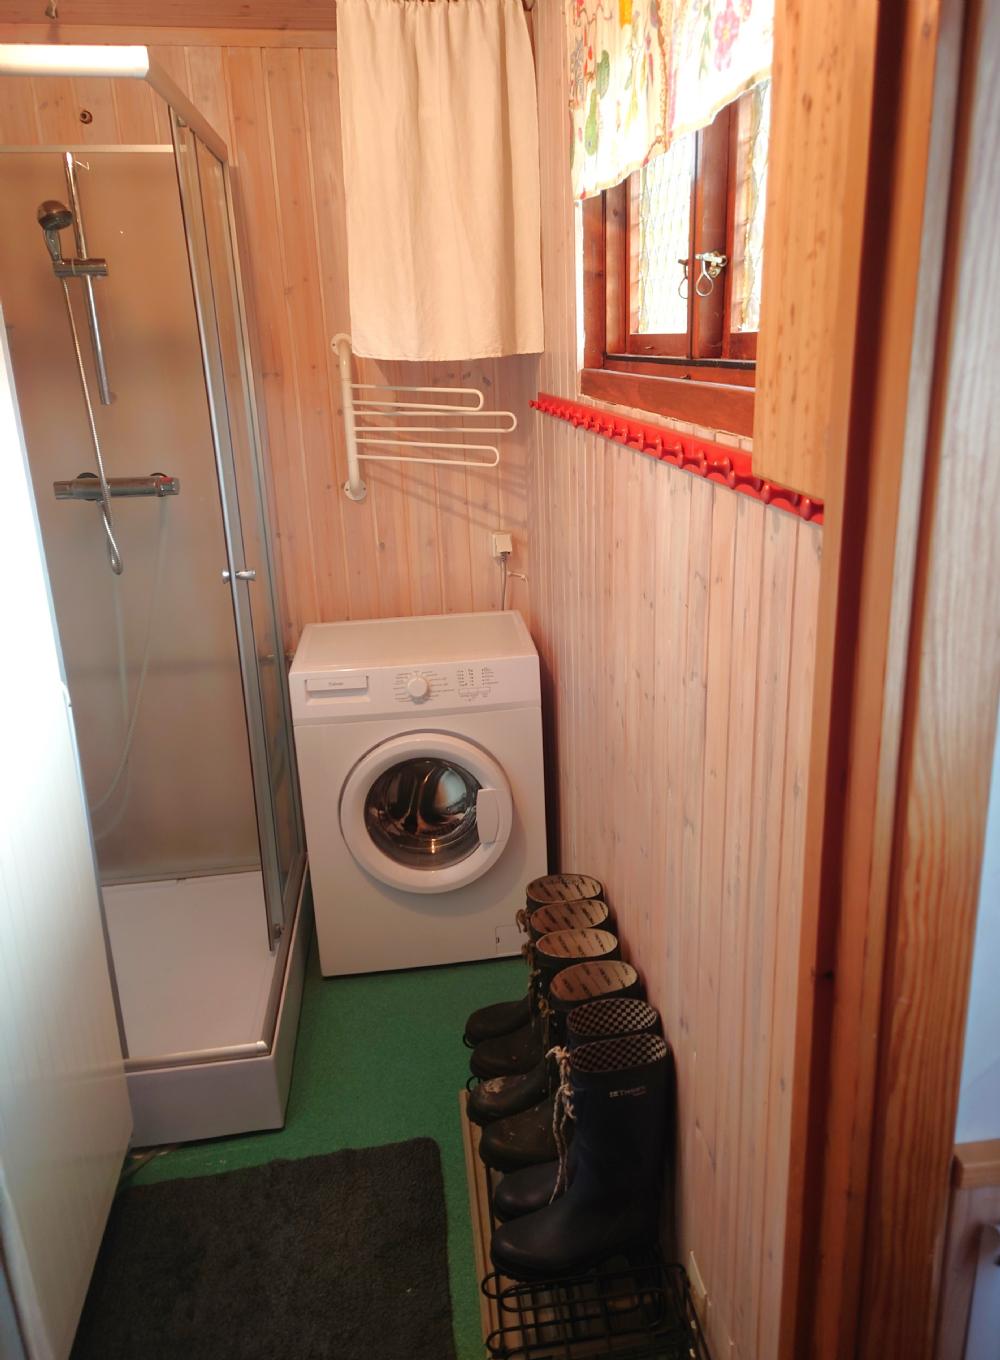 Dusch och tvttrum/ Shower and laundry room 